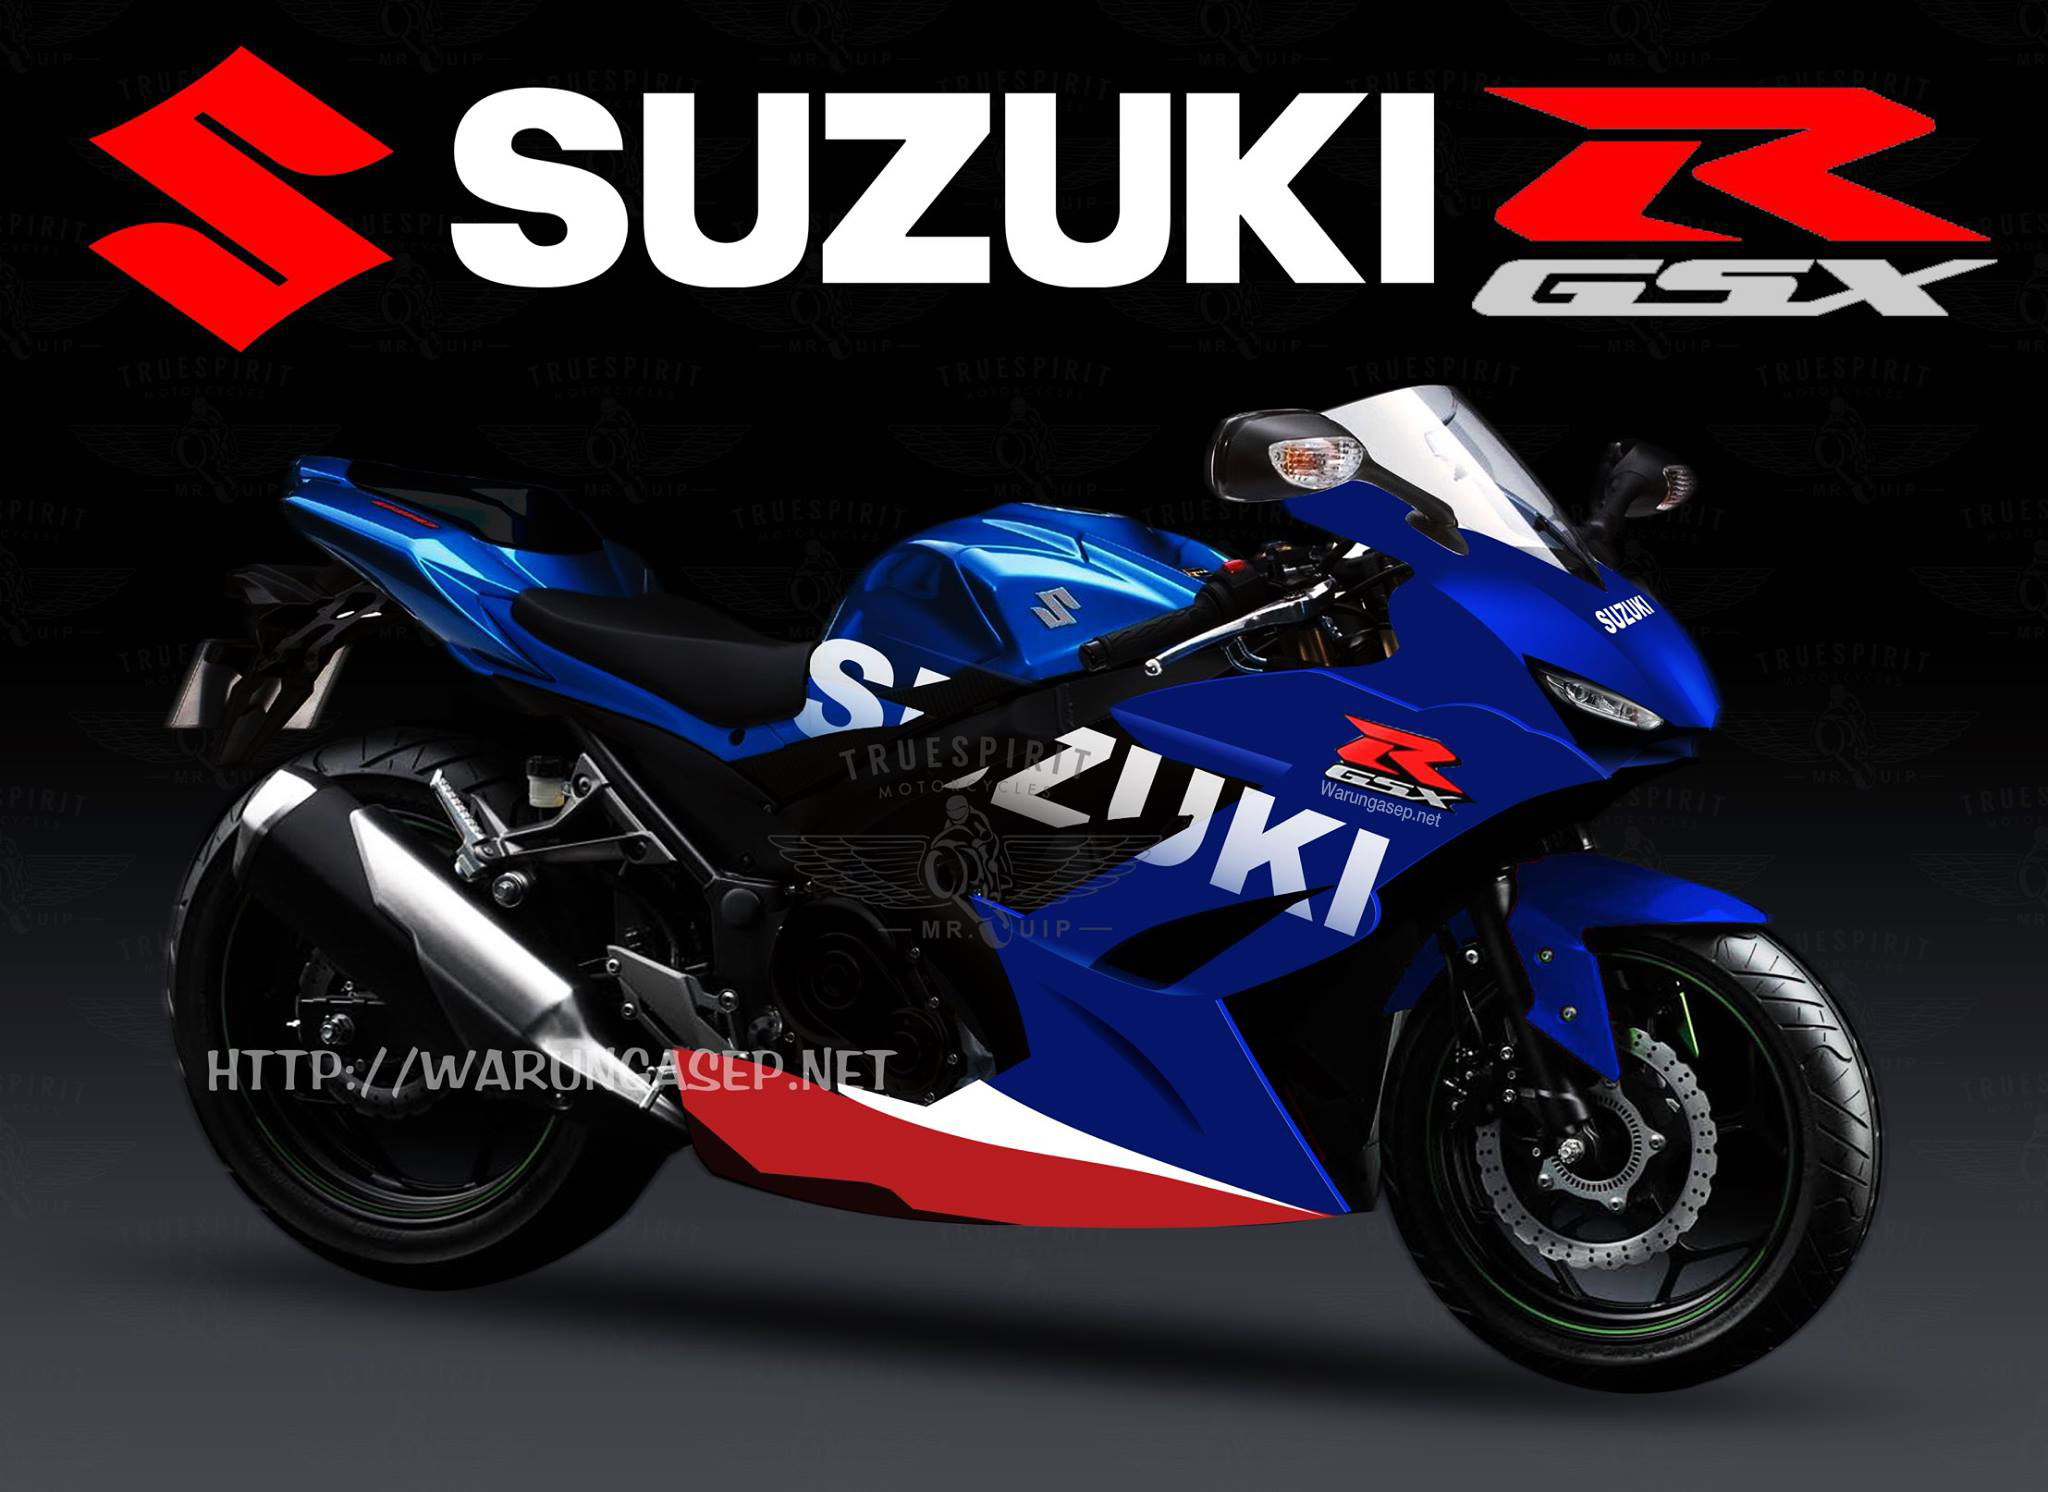 suzuki gixxer wallpaper,land vehicle,vehicle,motorcycle,motorcycle fairing,motorcycle racer